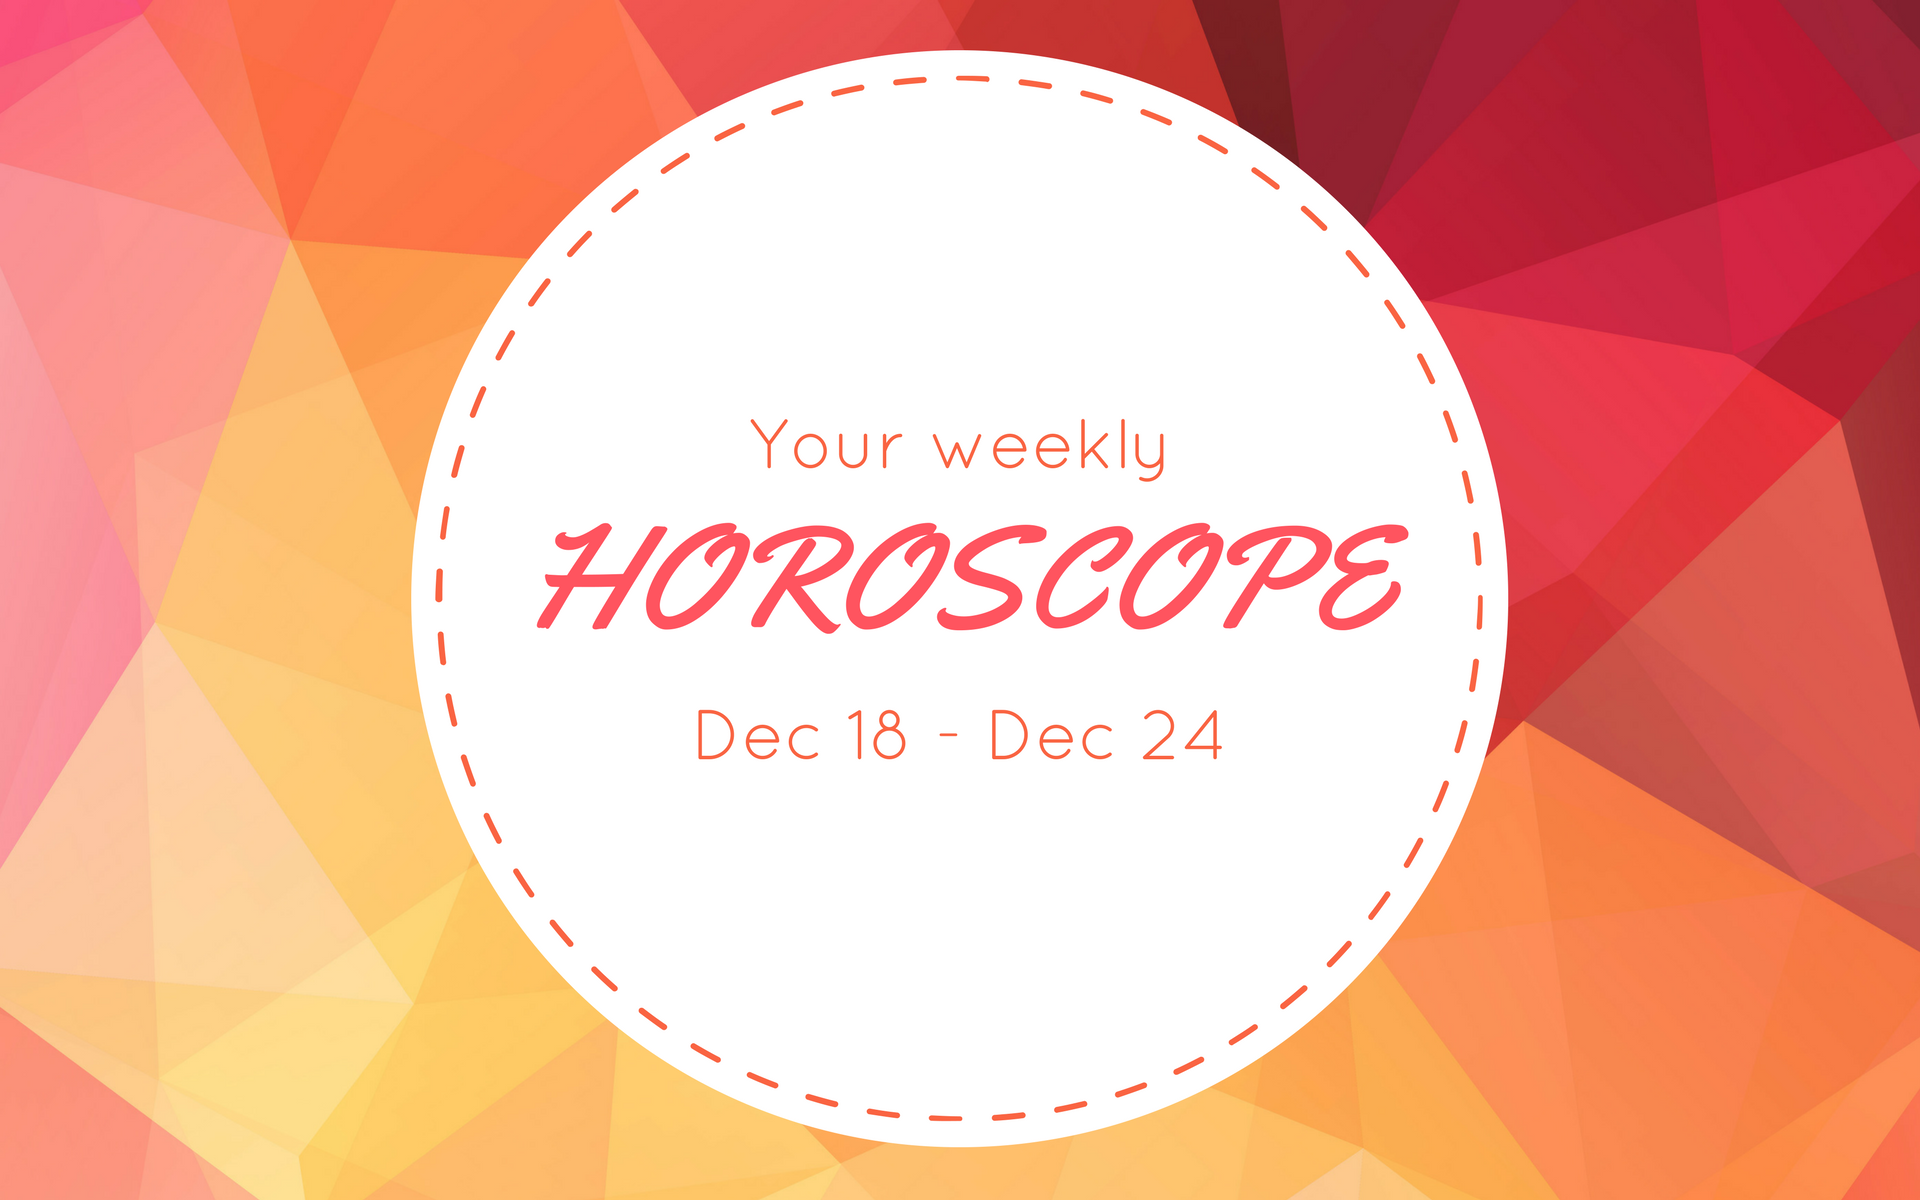 Your Weekly Horoscope: Dec 18 - Dec 24